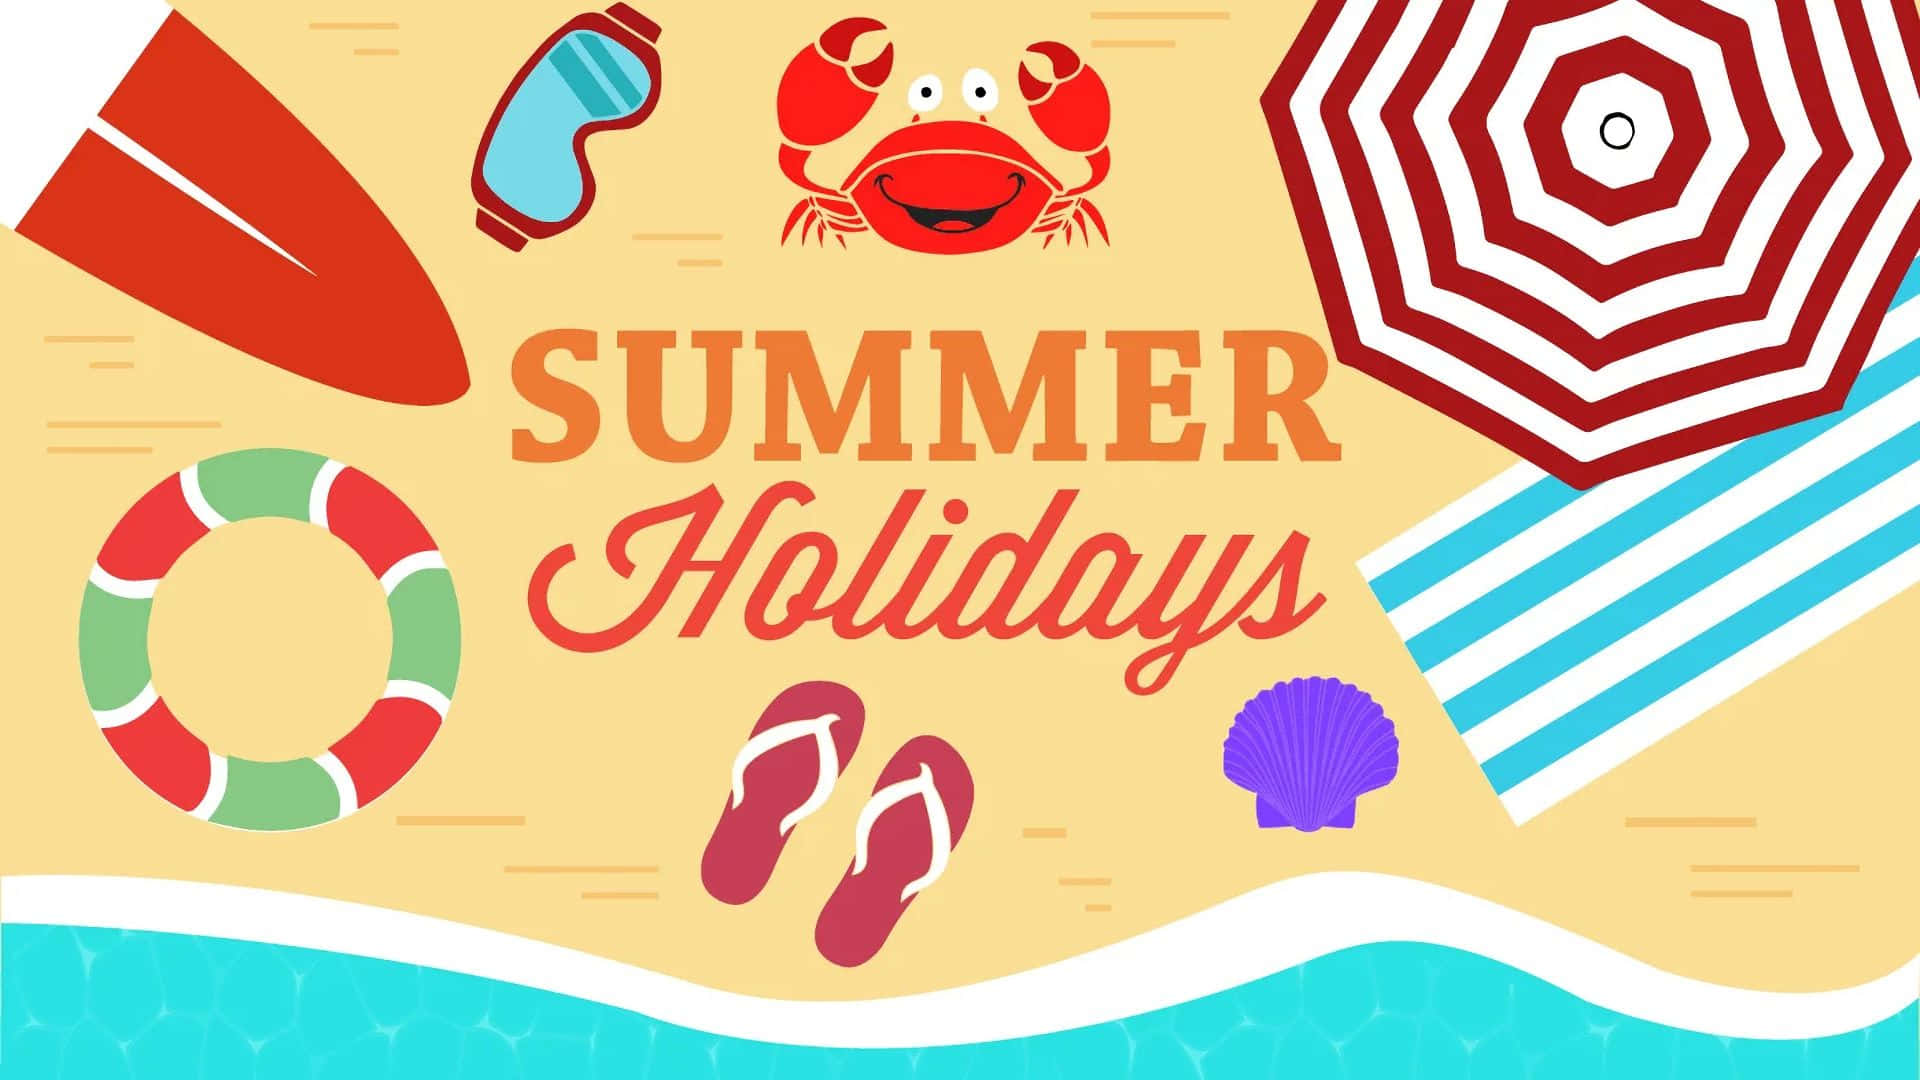 1920x1080 Summer Holidays Graphic Background